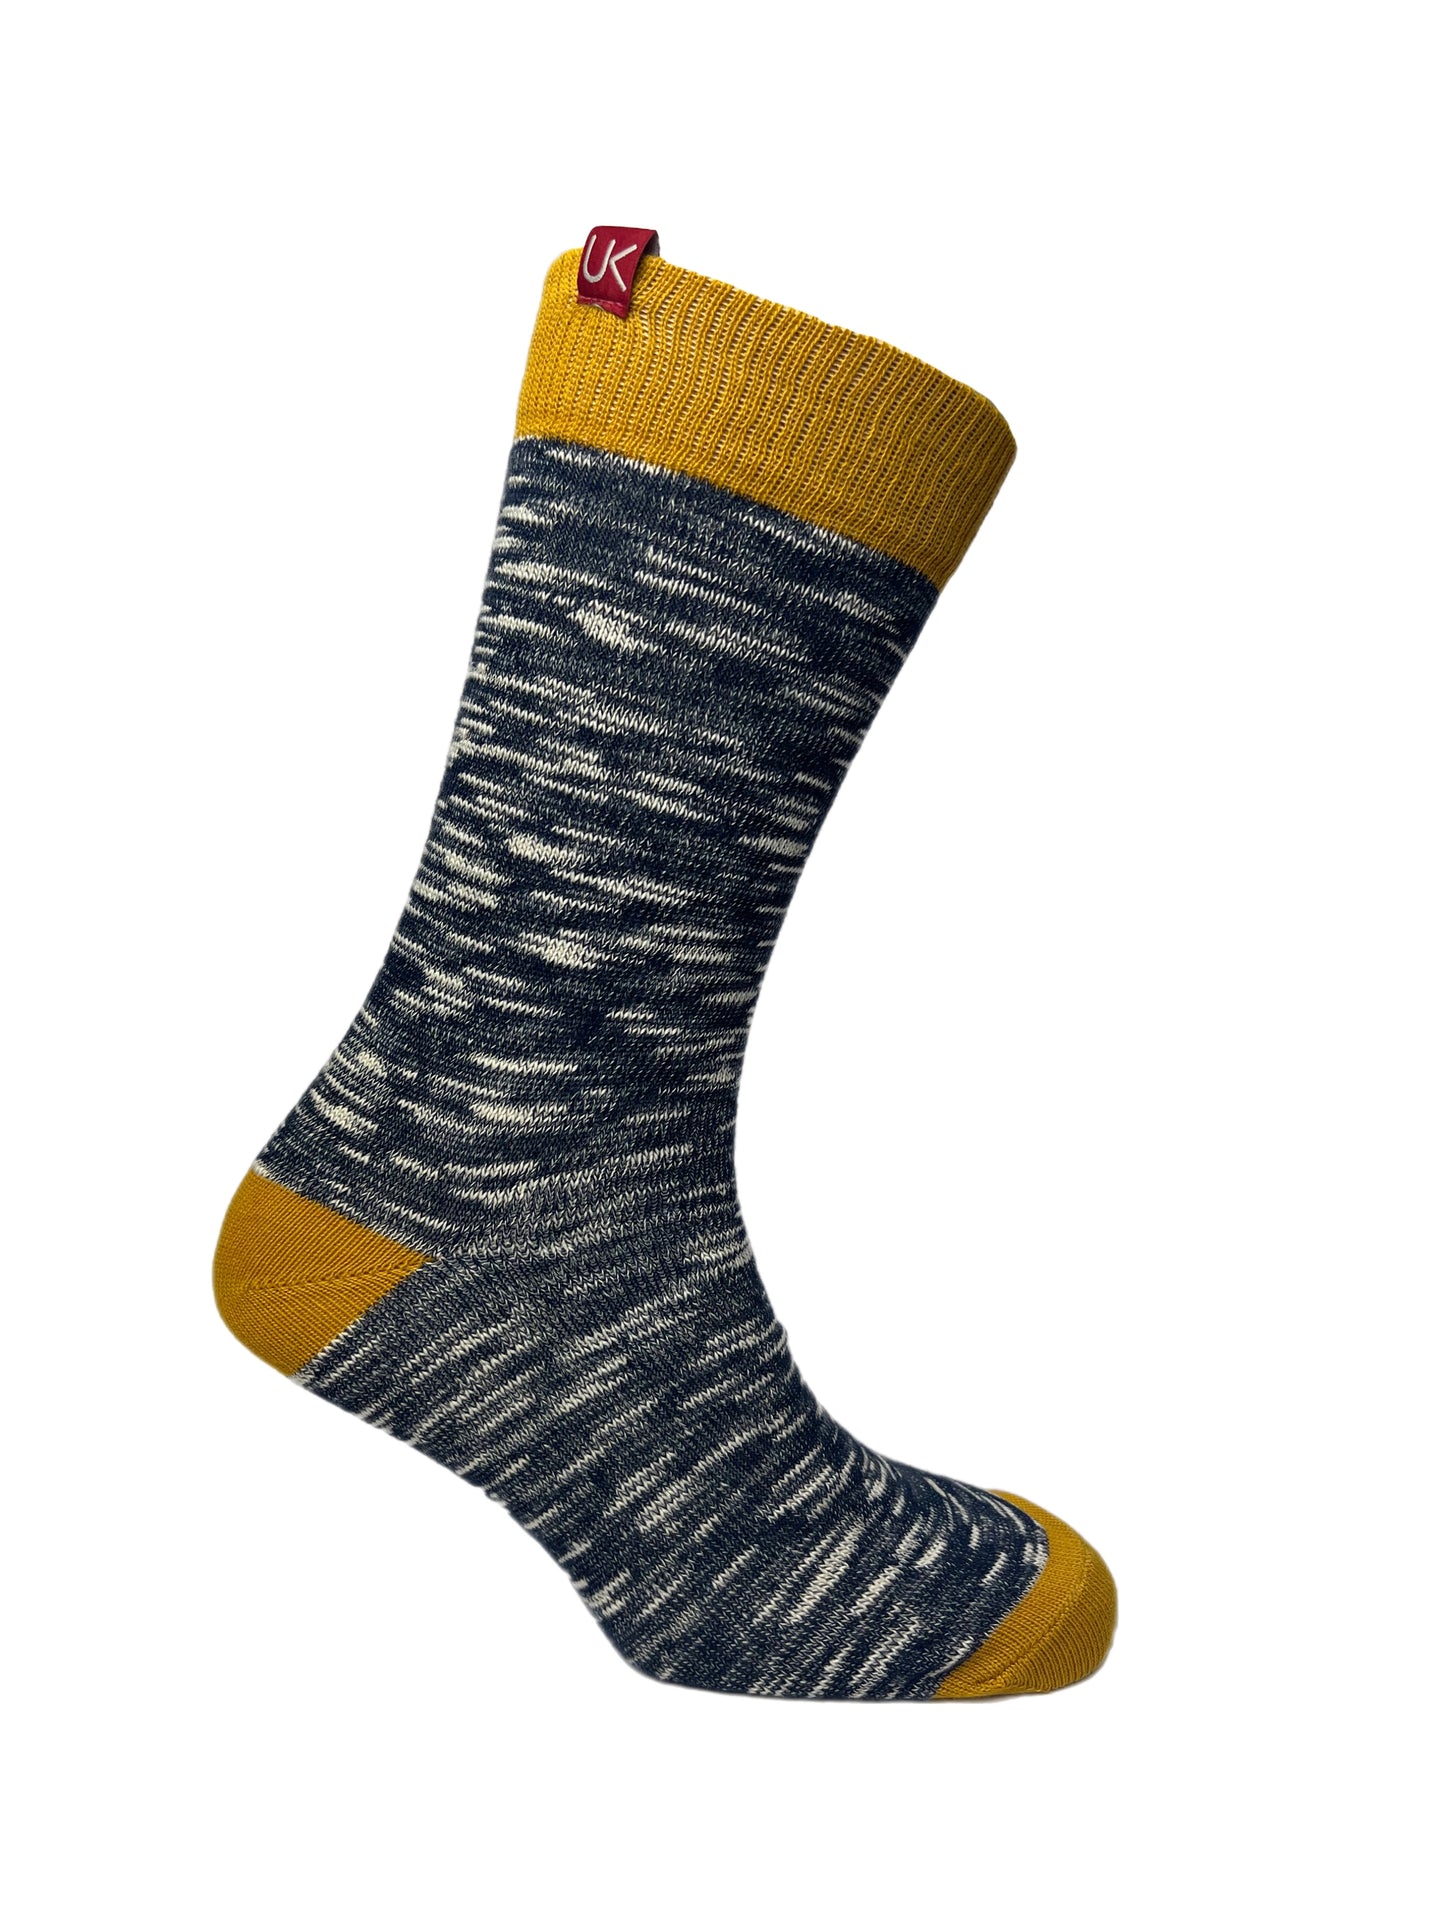 Men's 2pp Navy & Khaki Slub Boot Socks